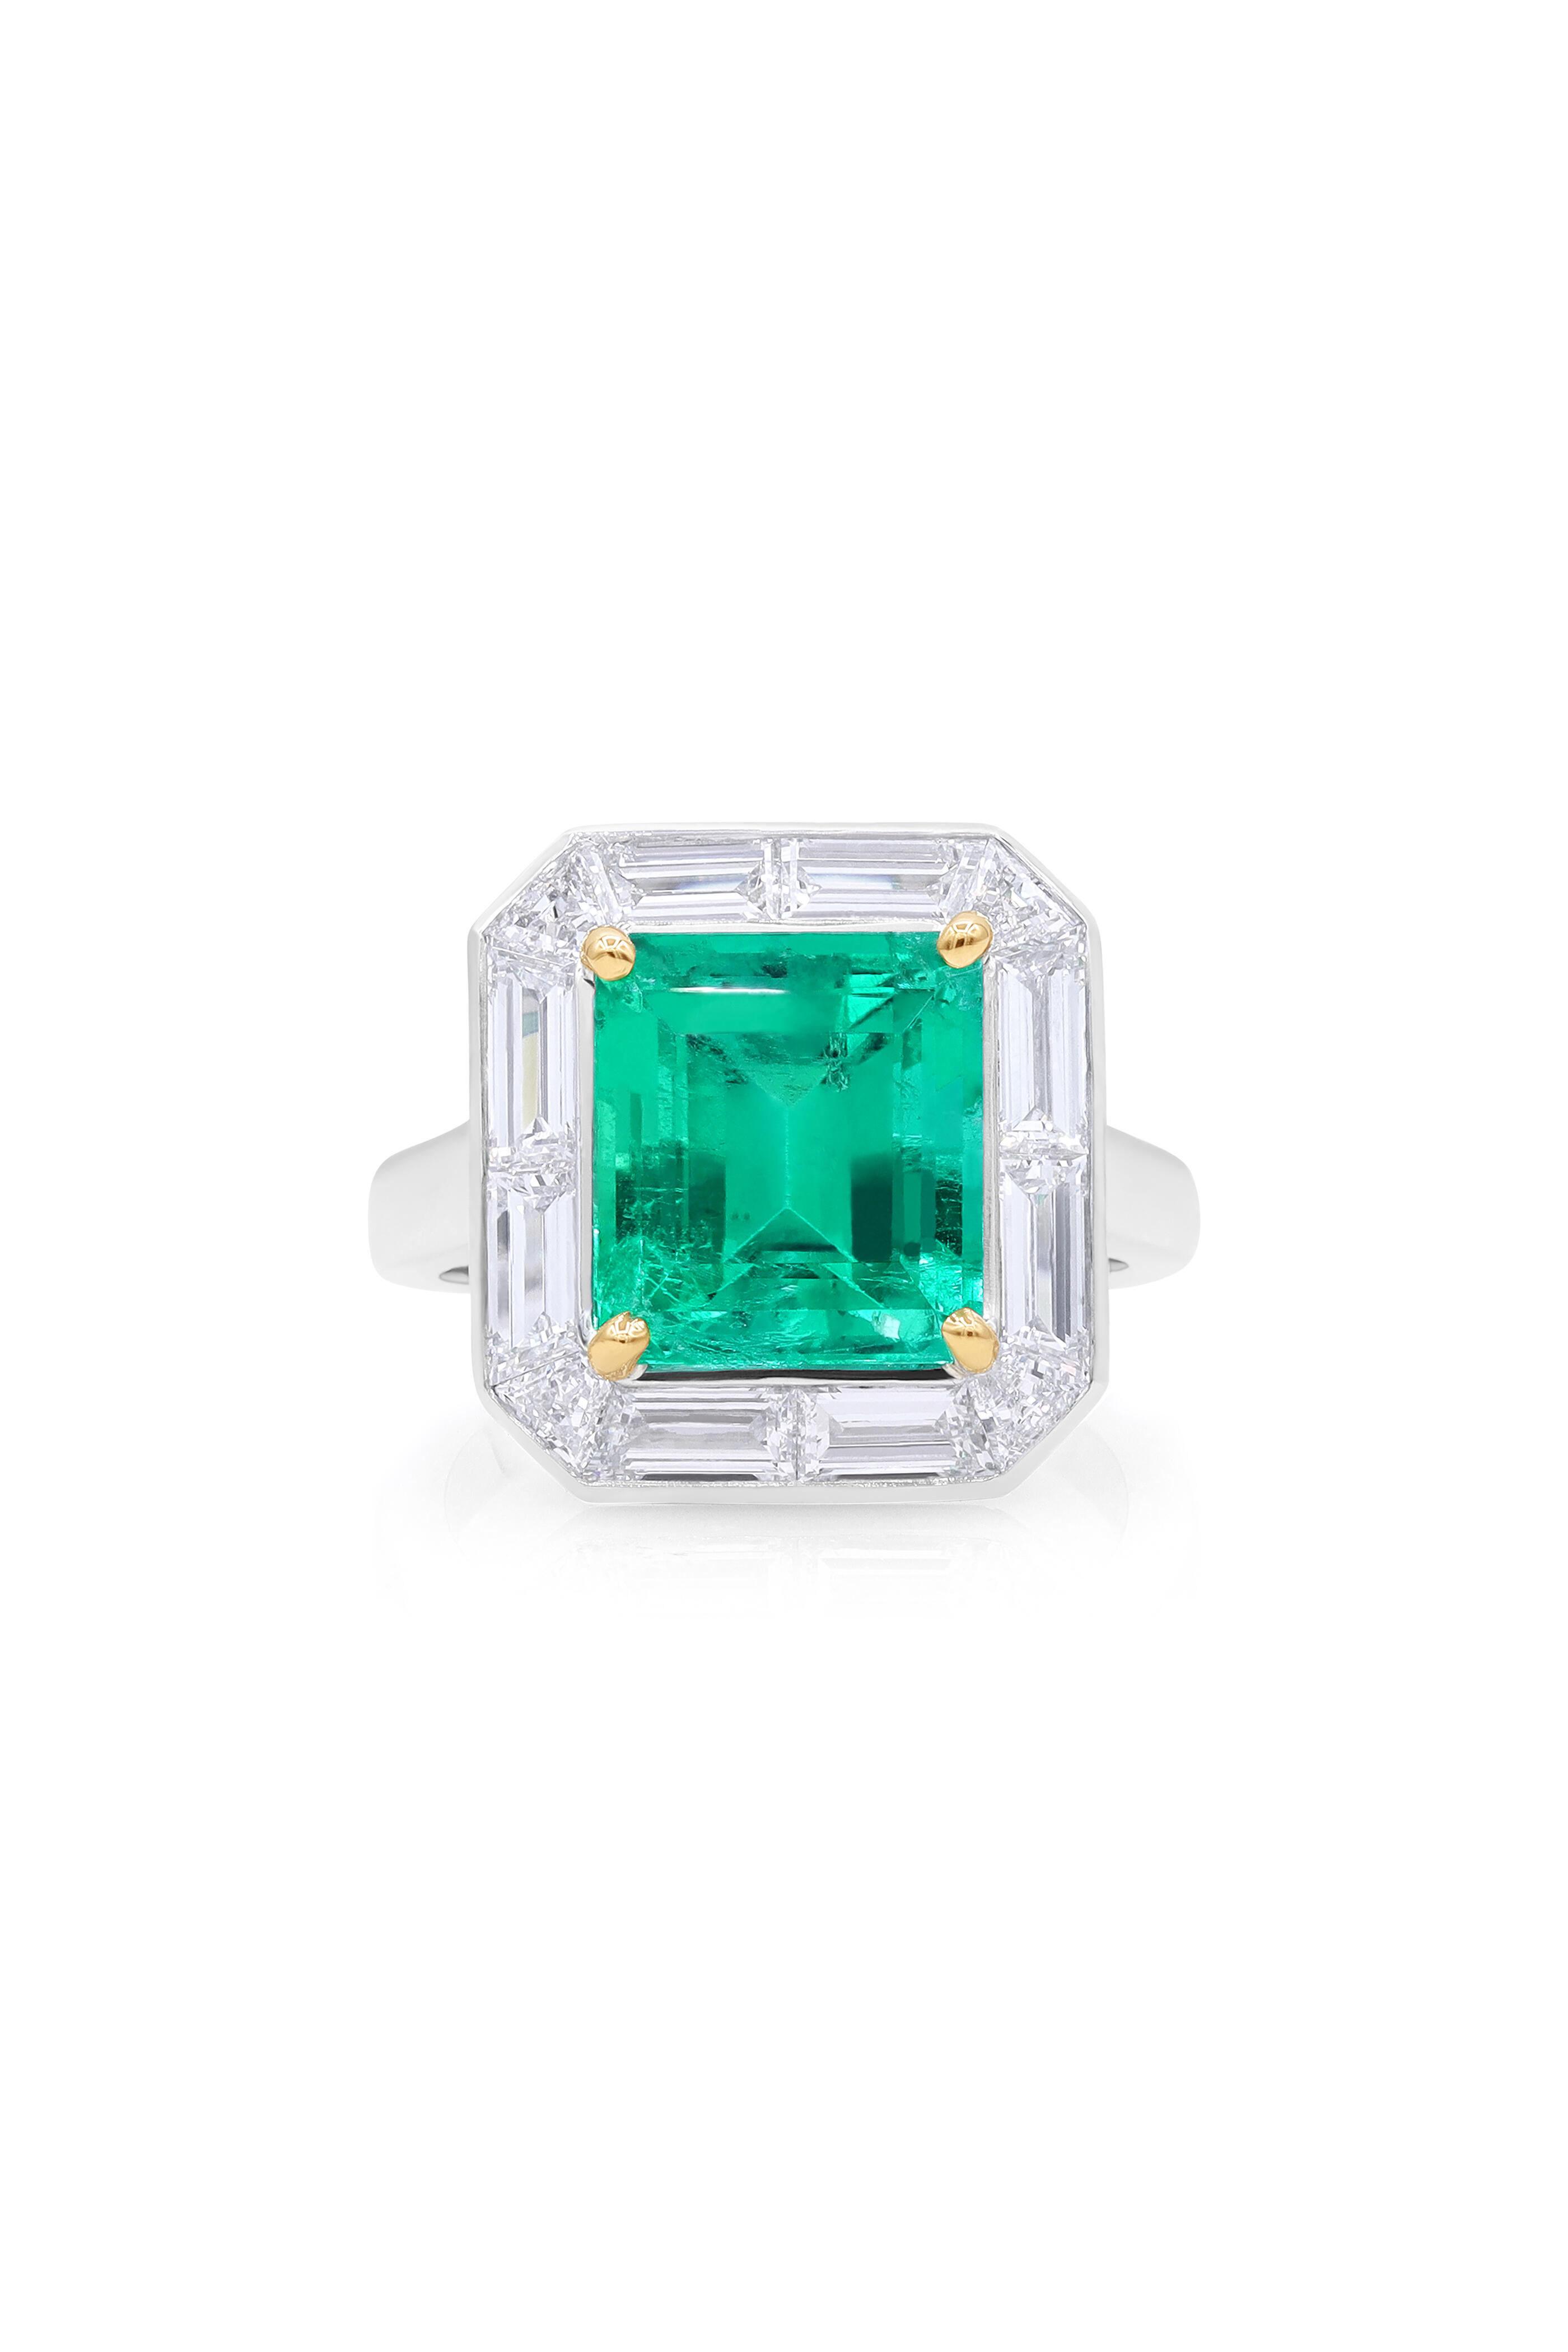 Oscar Heyman - Platinum Colombian Emerald & Diamond Ring